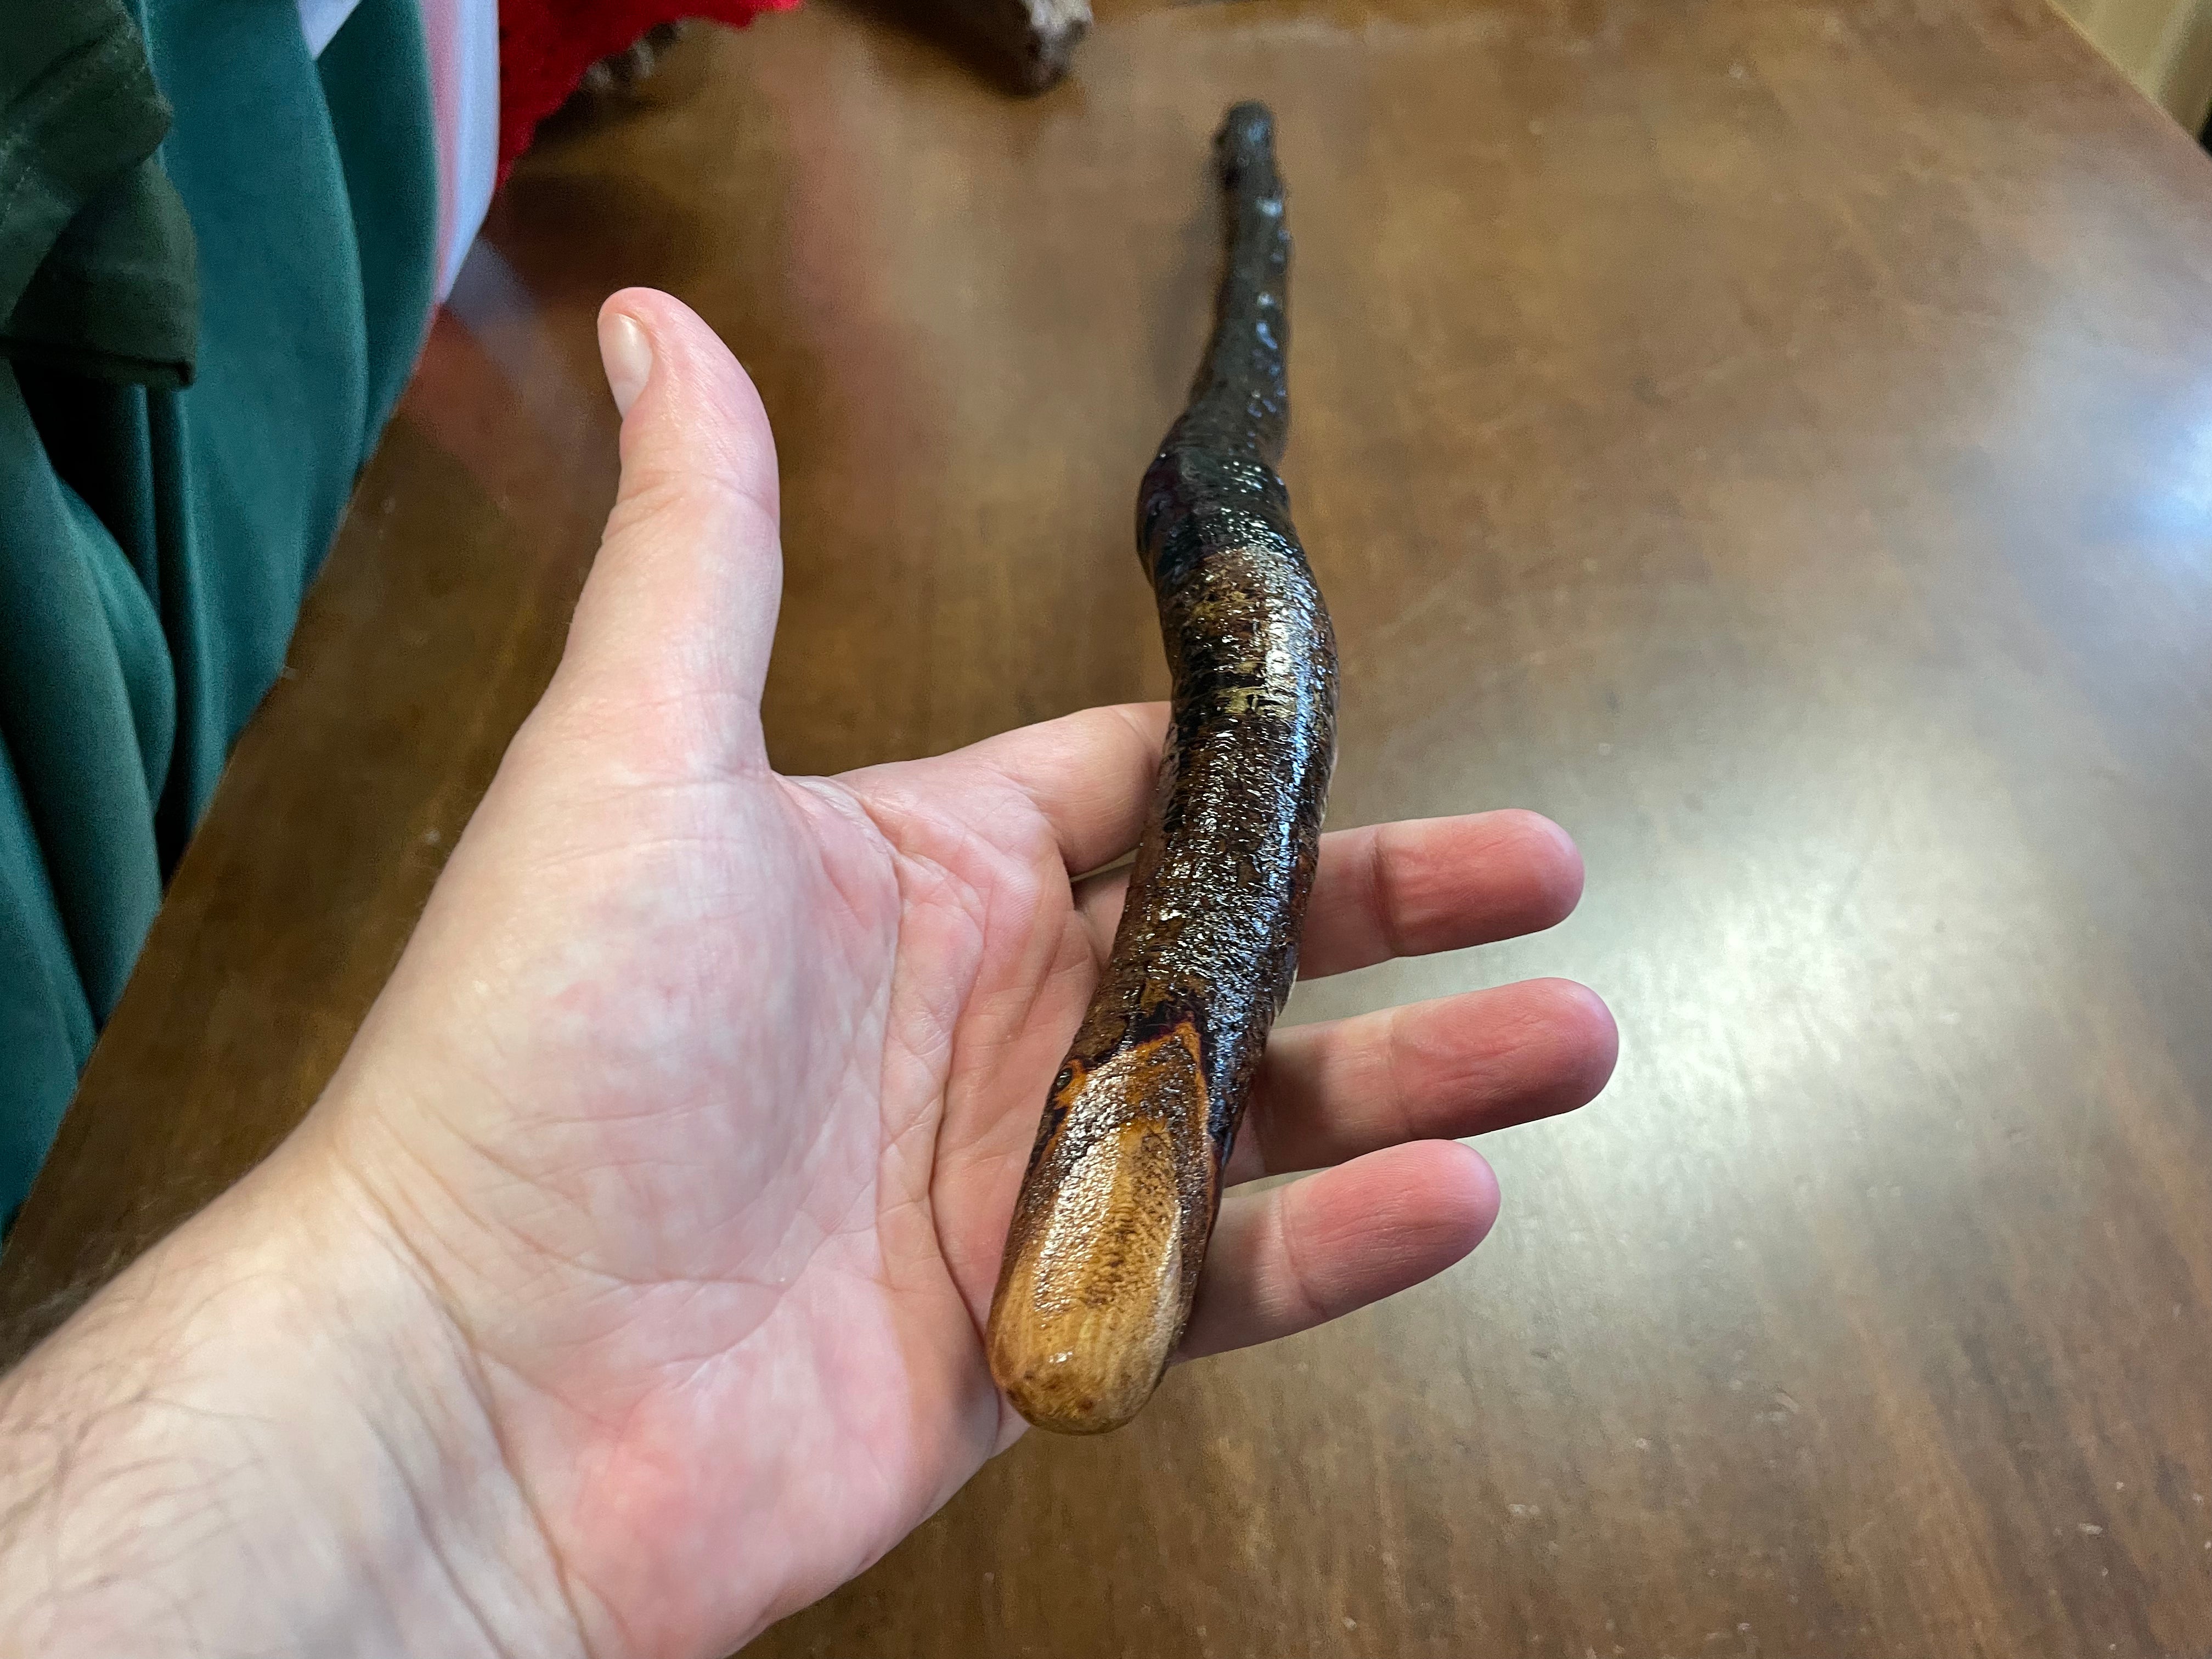 Blackthorn Walking Stick 32 1/2 inch - Handmade in Ireland